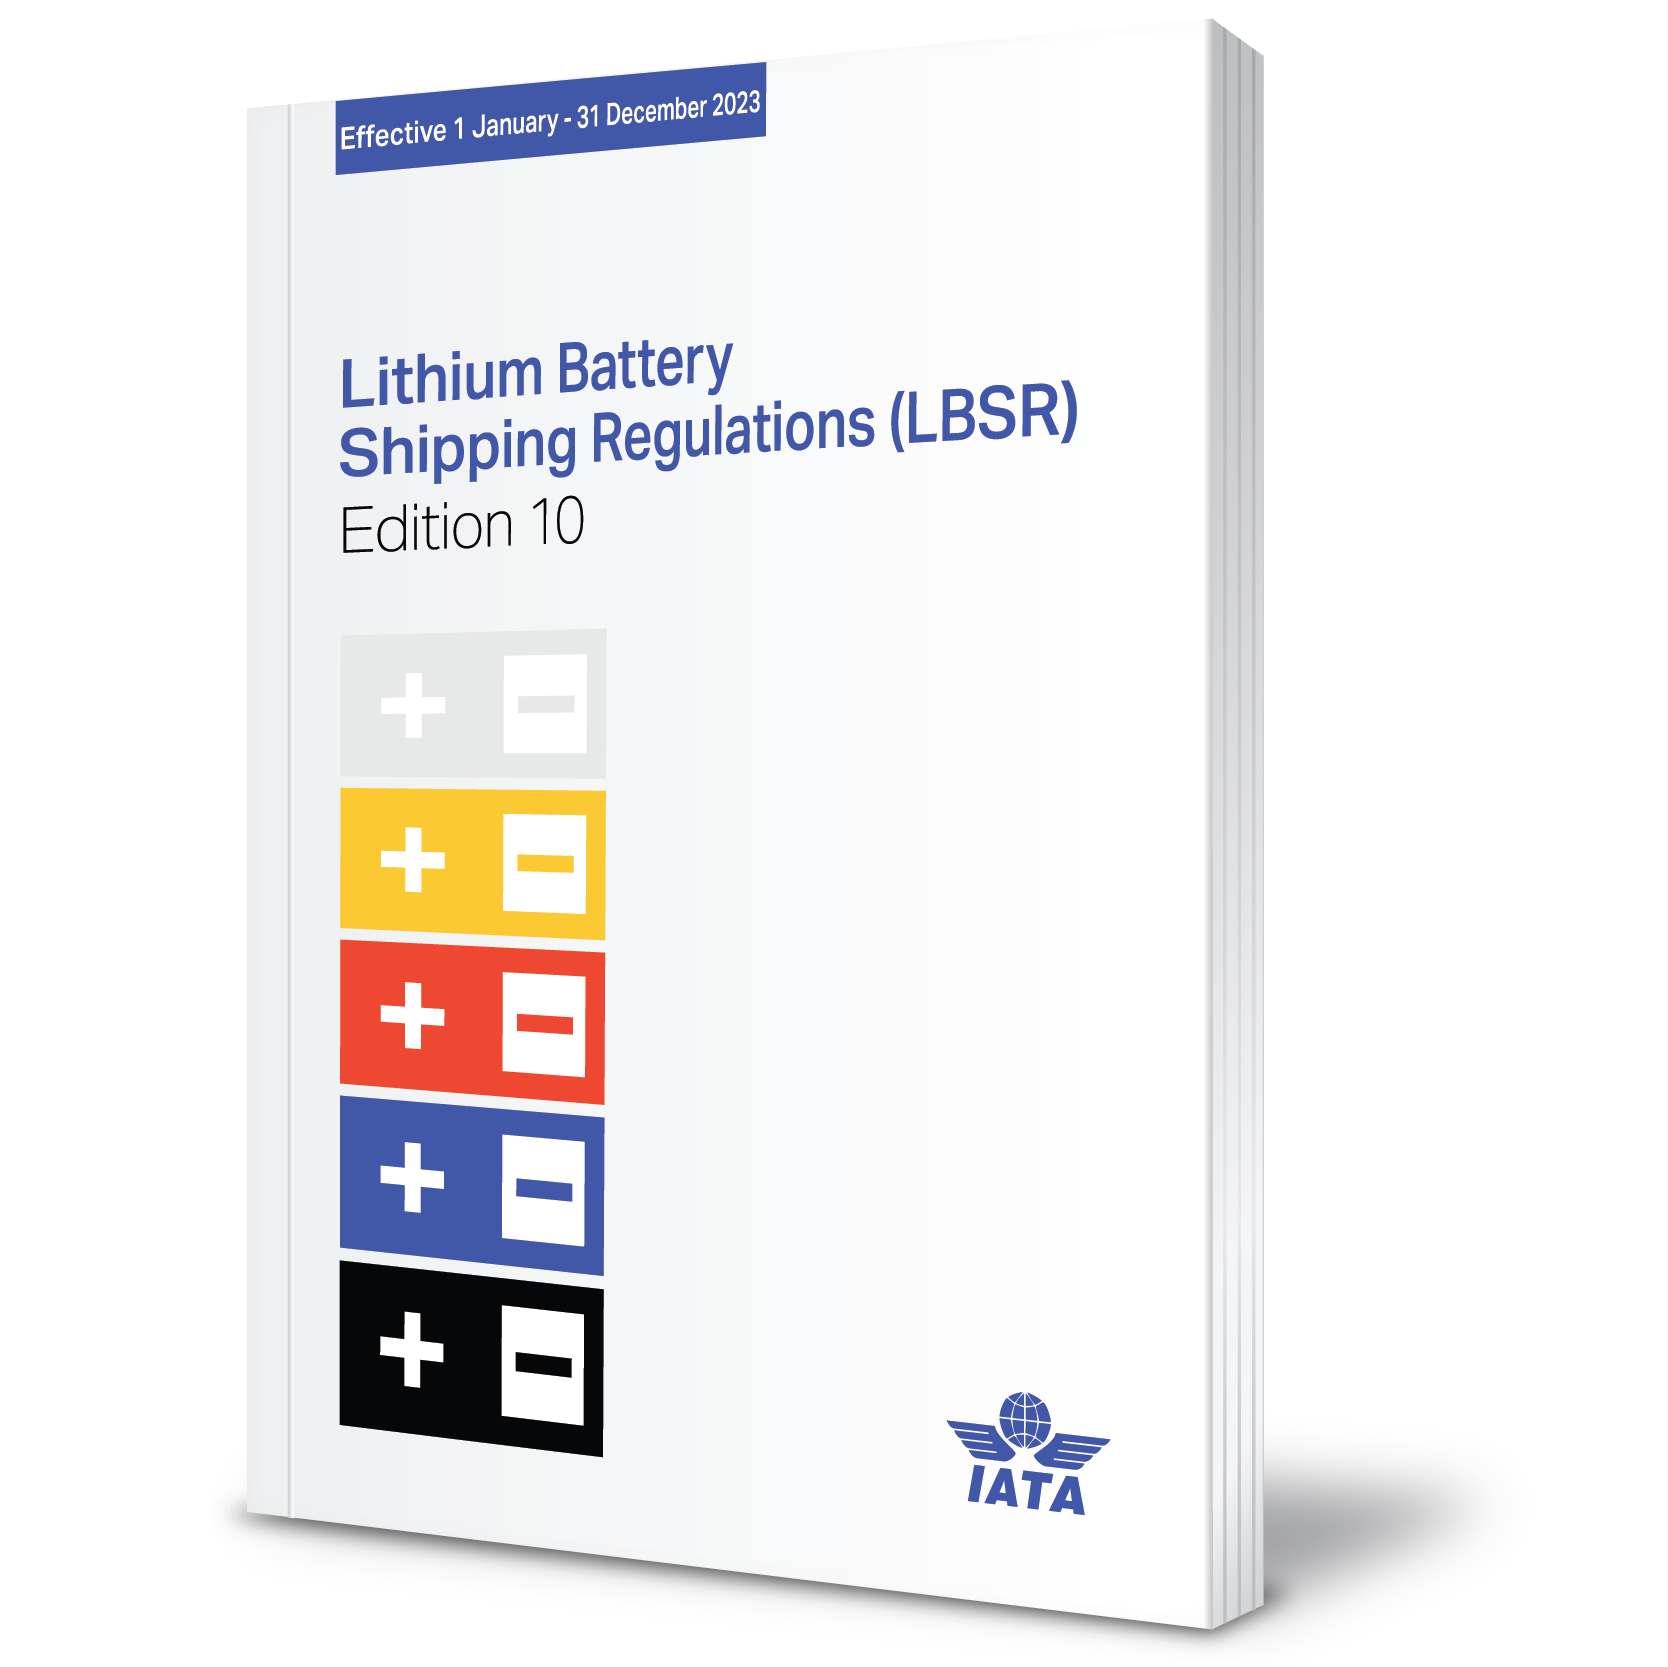 2023-iata-lithium-battery-shipping-regulations-lbsr-icc